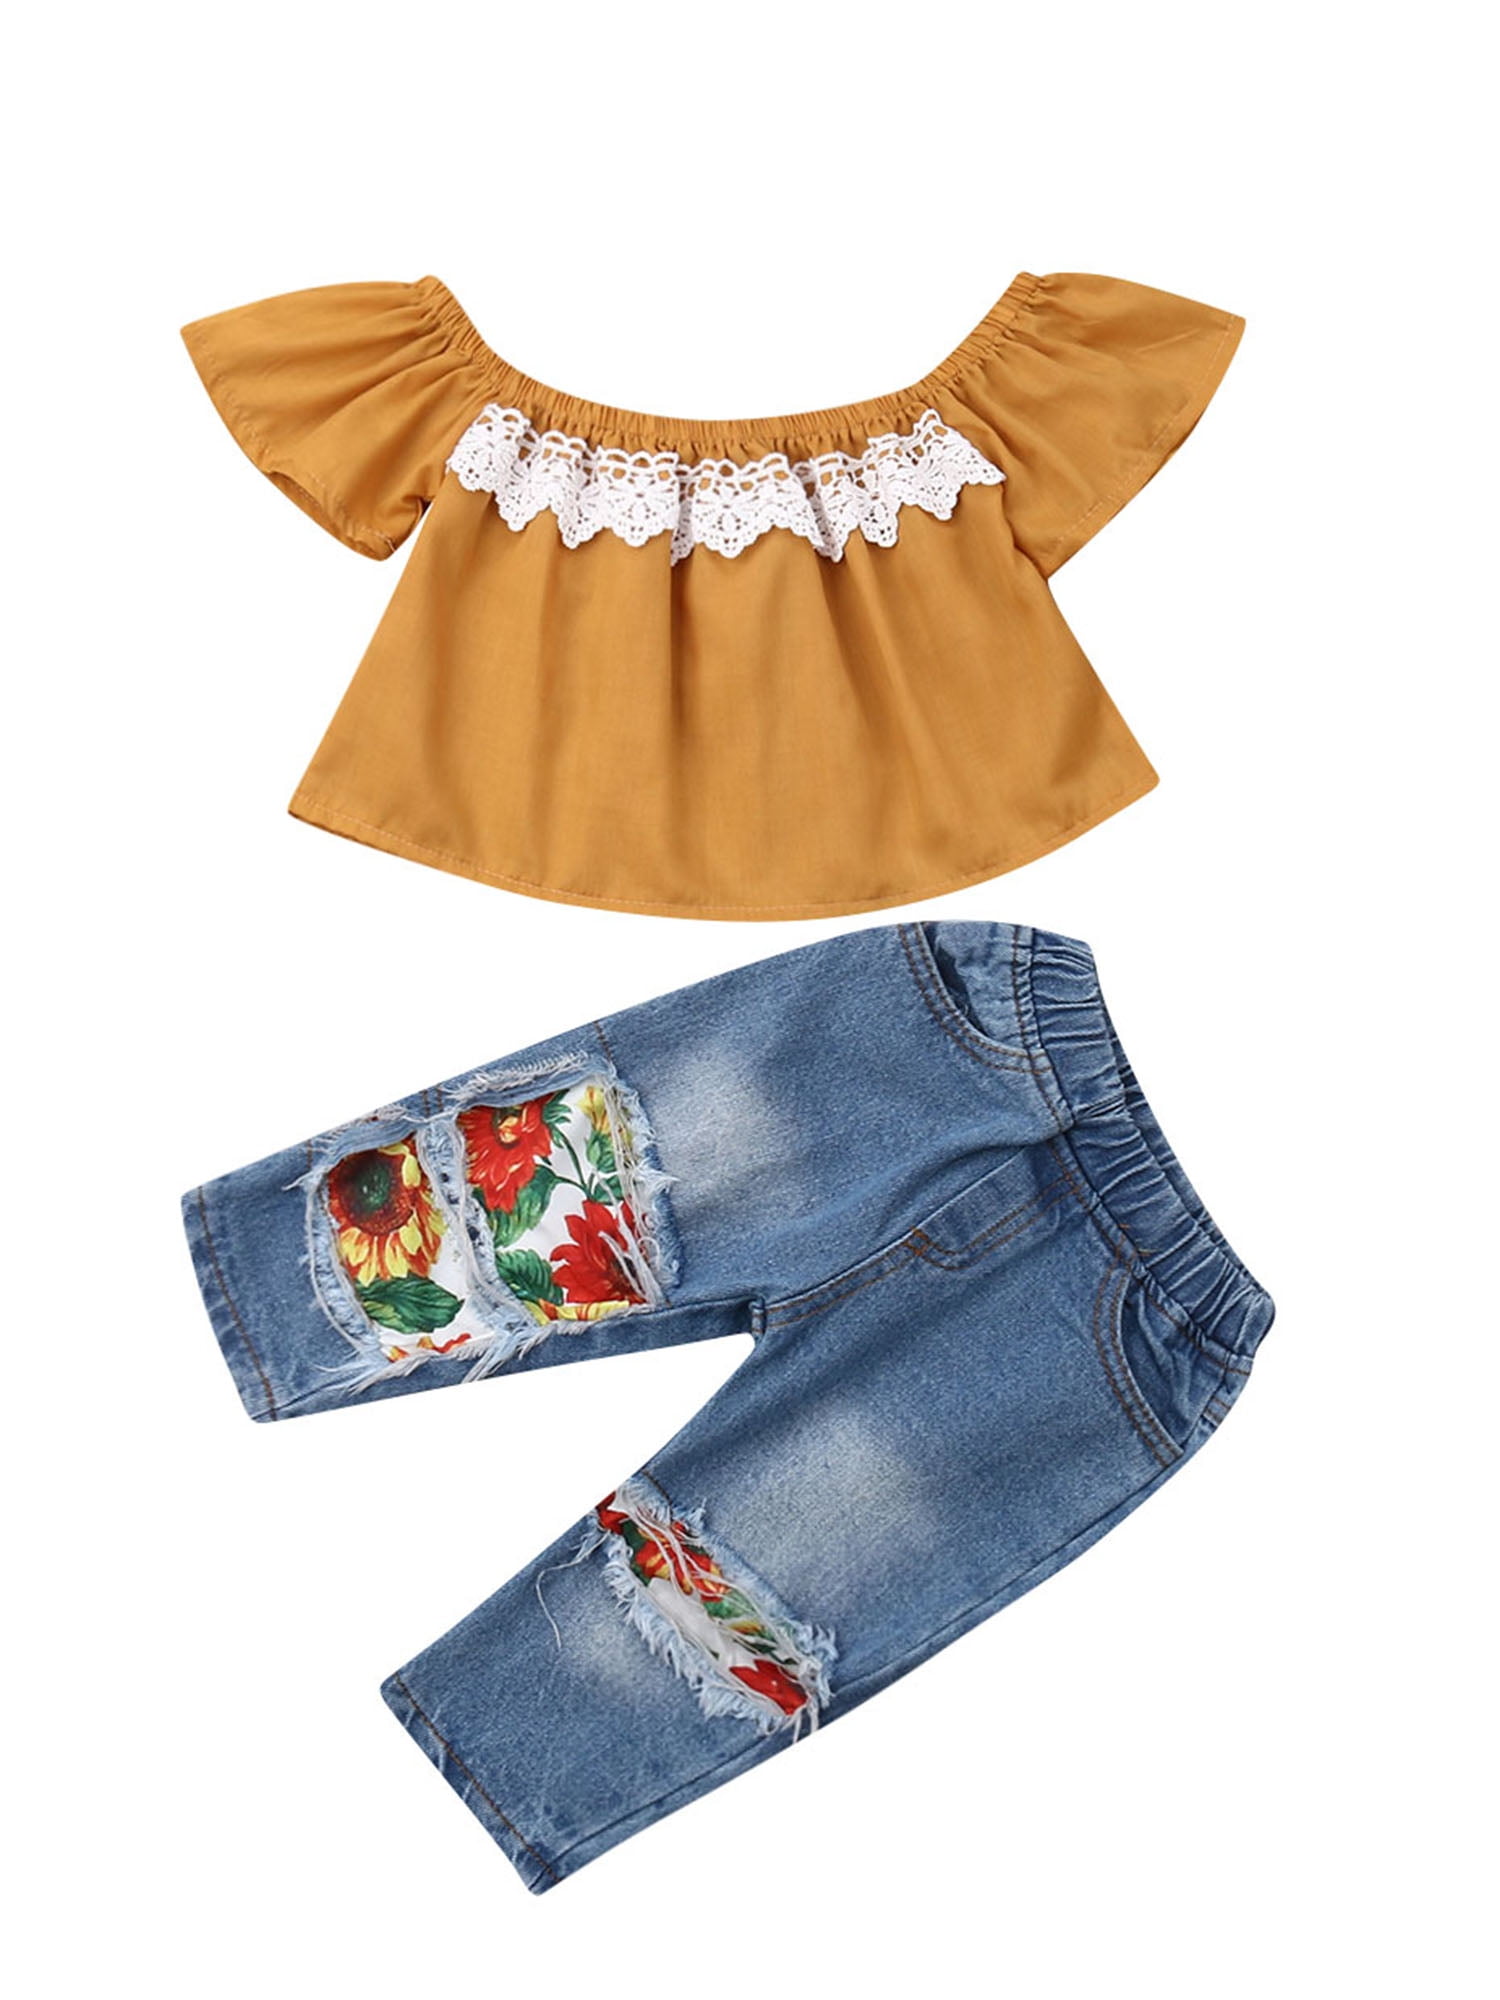 Denim pants Kids Clothes Set Details about   2Pcs Toddler Infant Girls Outfits Long Sleeve tops 